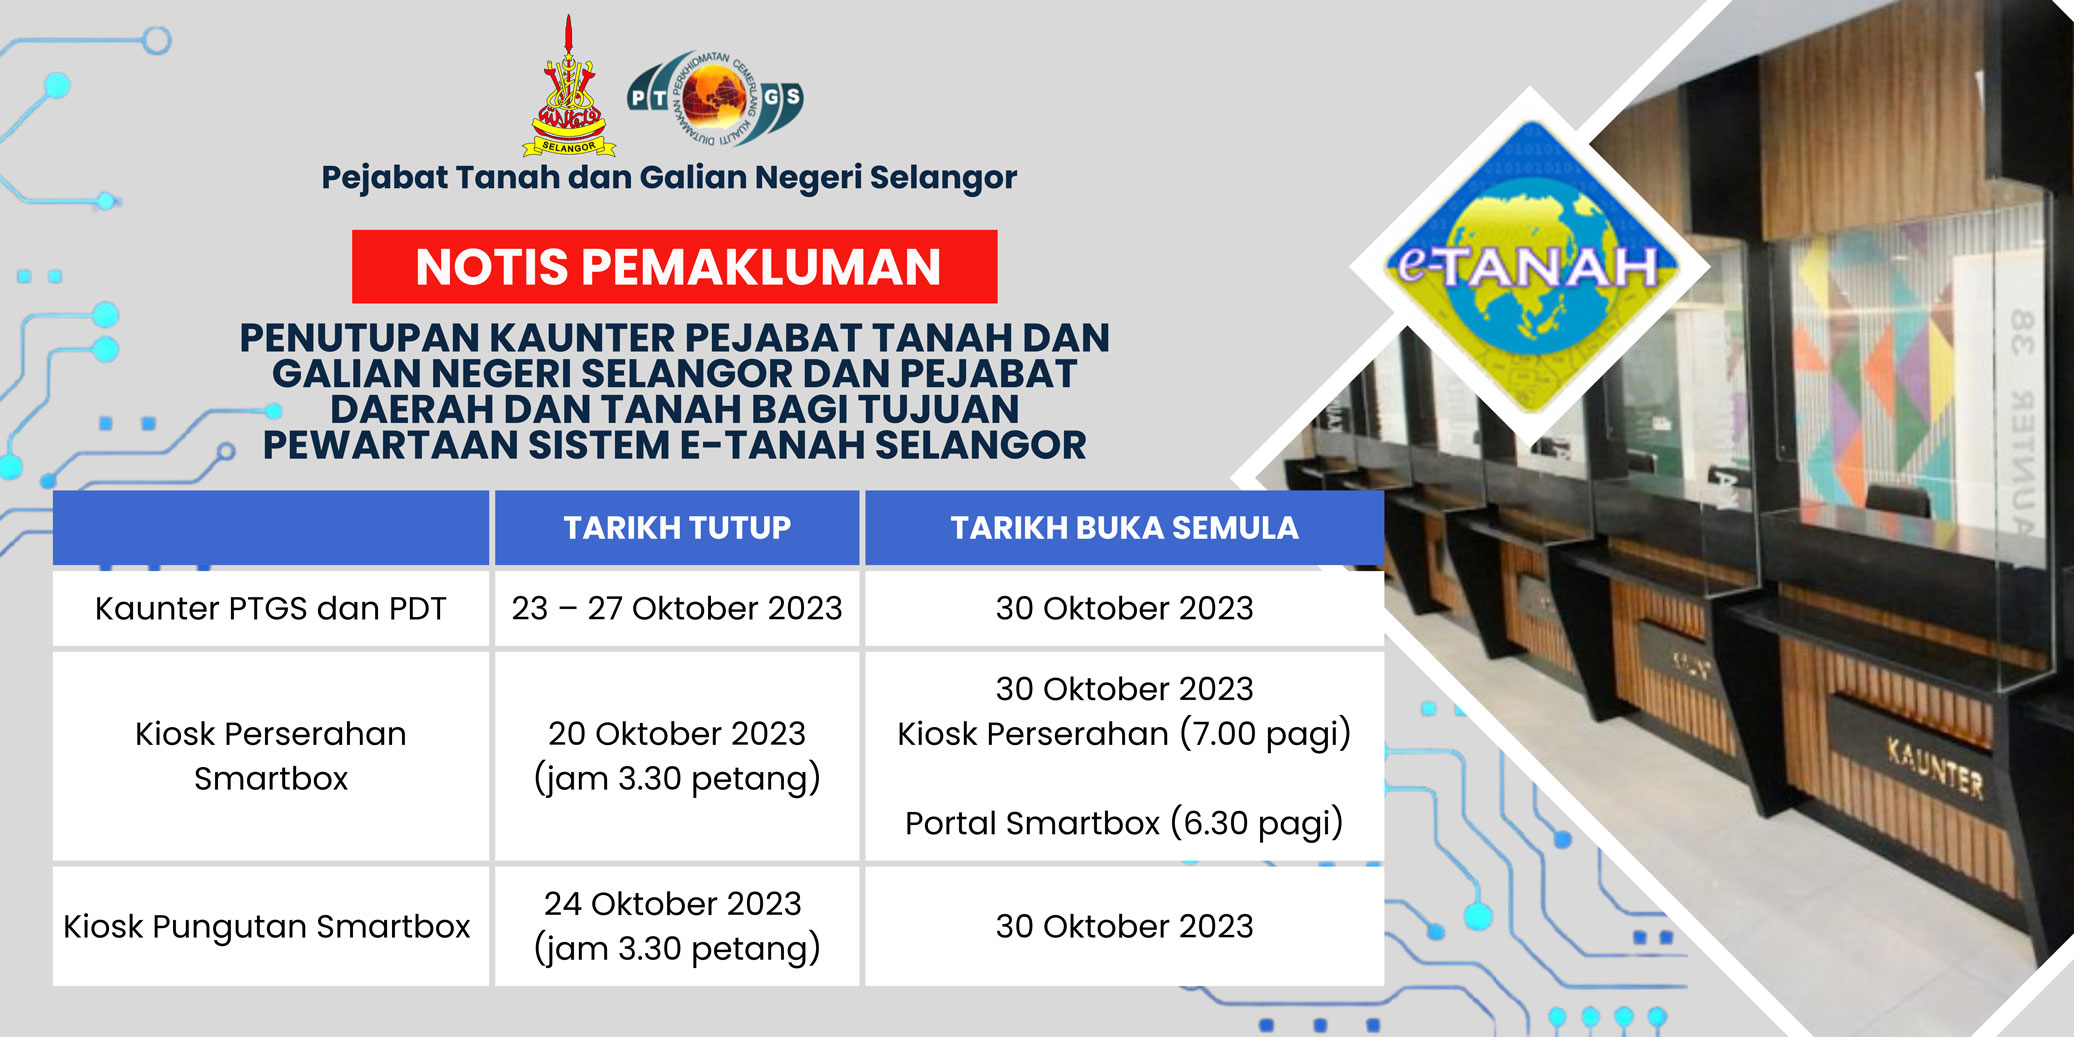 Penutupan Kaunter Pejabat Tanah 23-27 oktober 2023